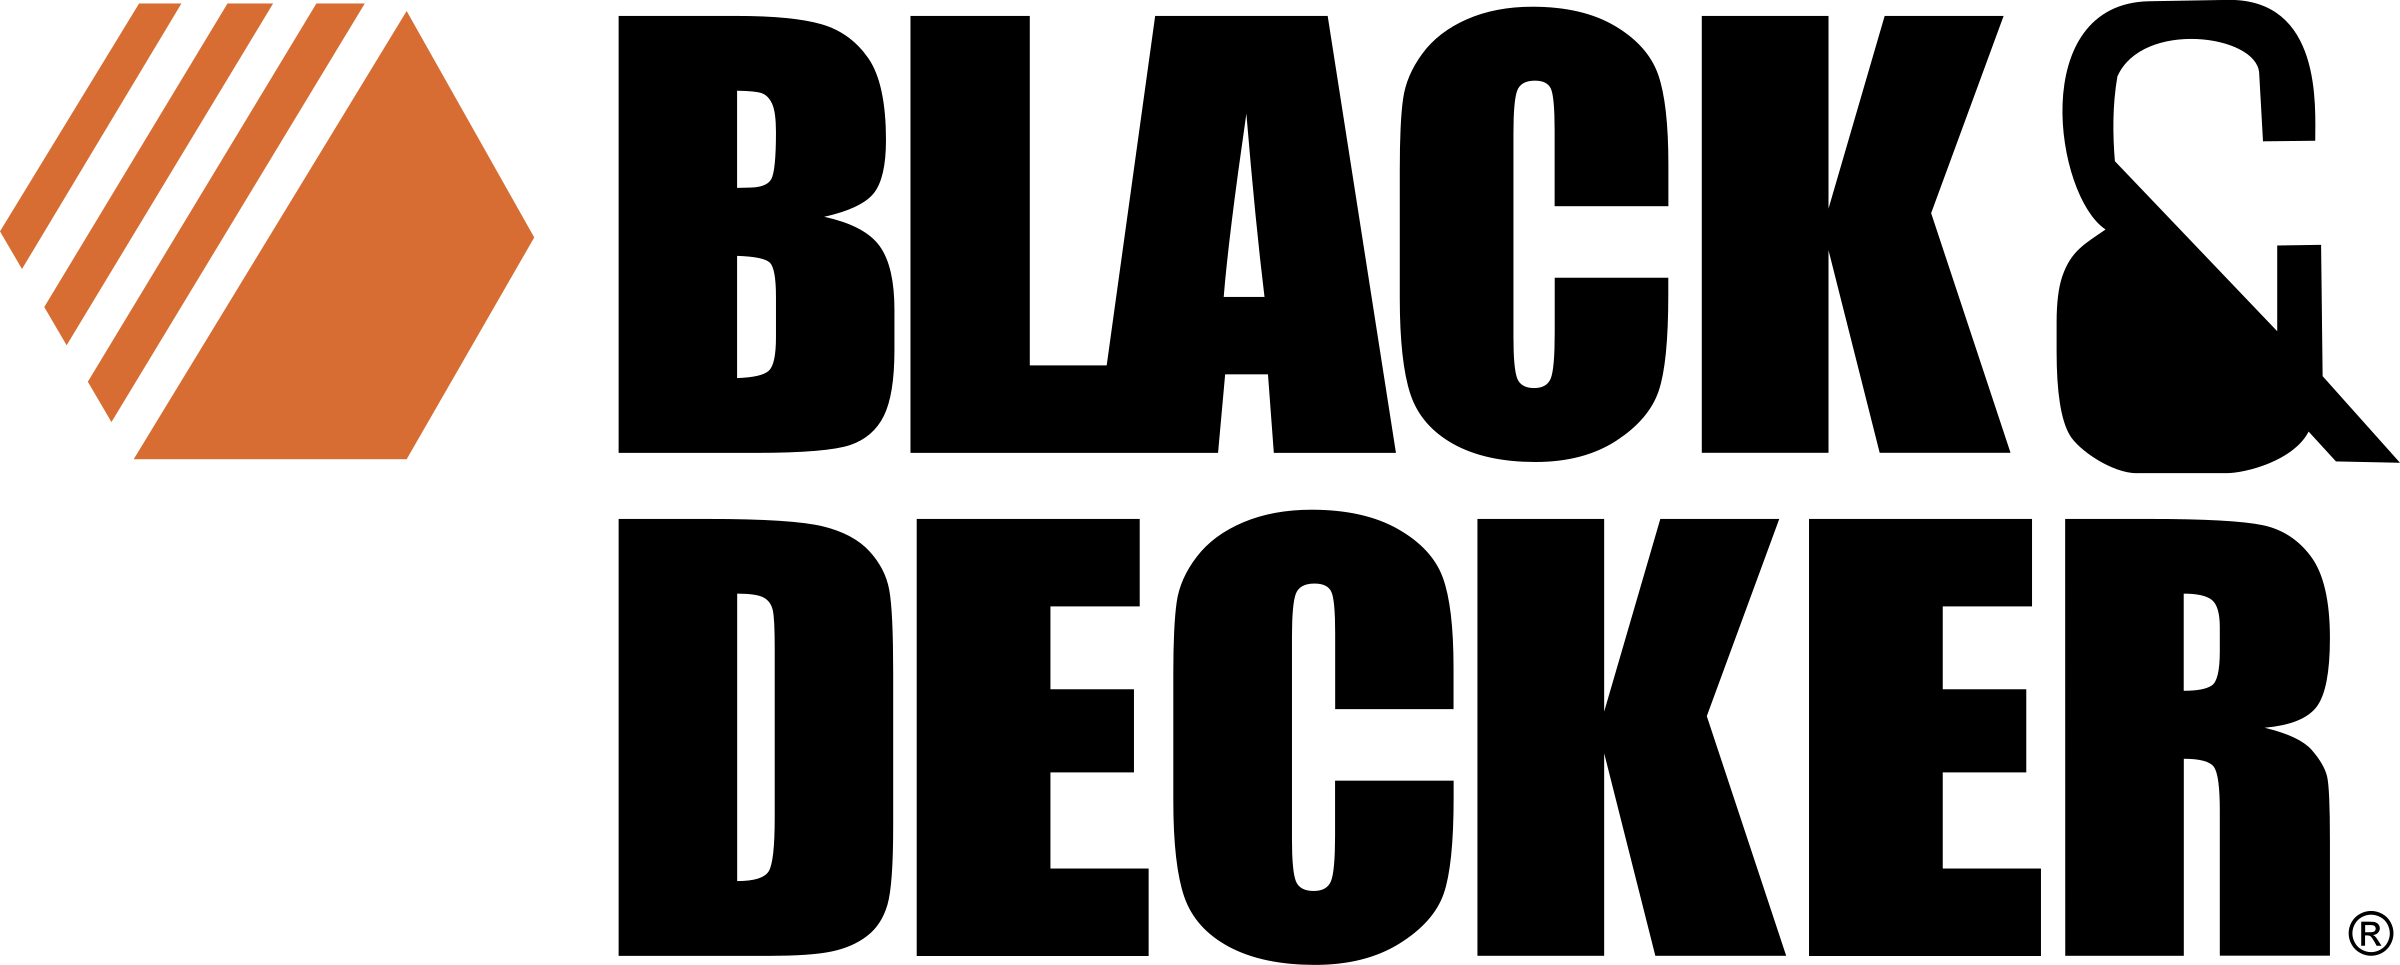 black-decker-3-logo-png-transparent.png